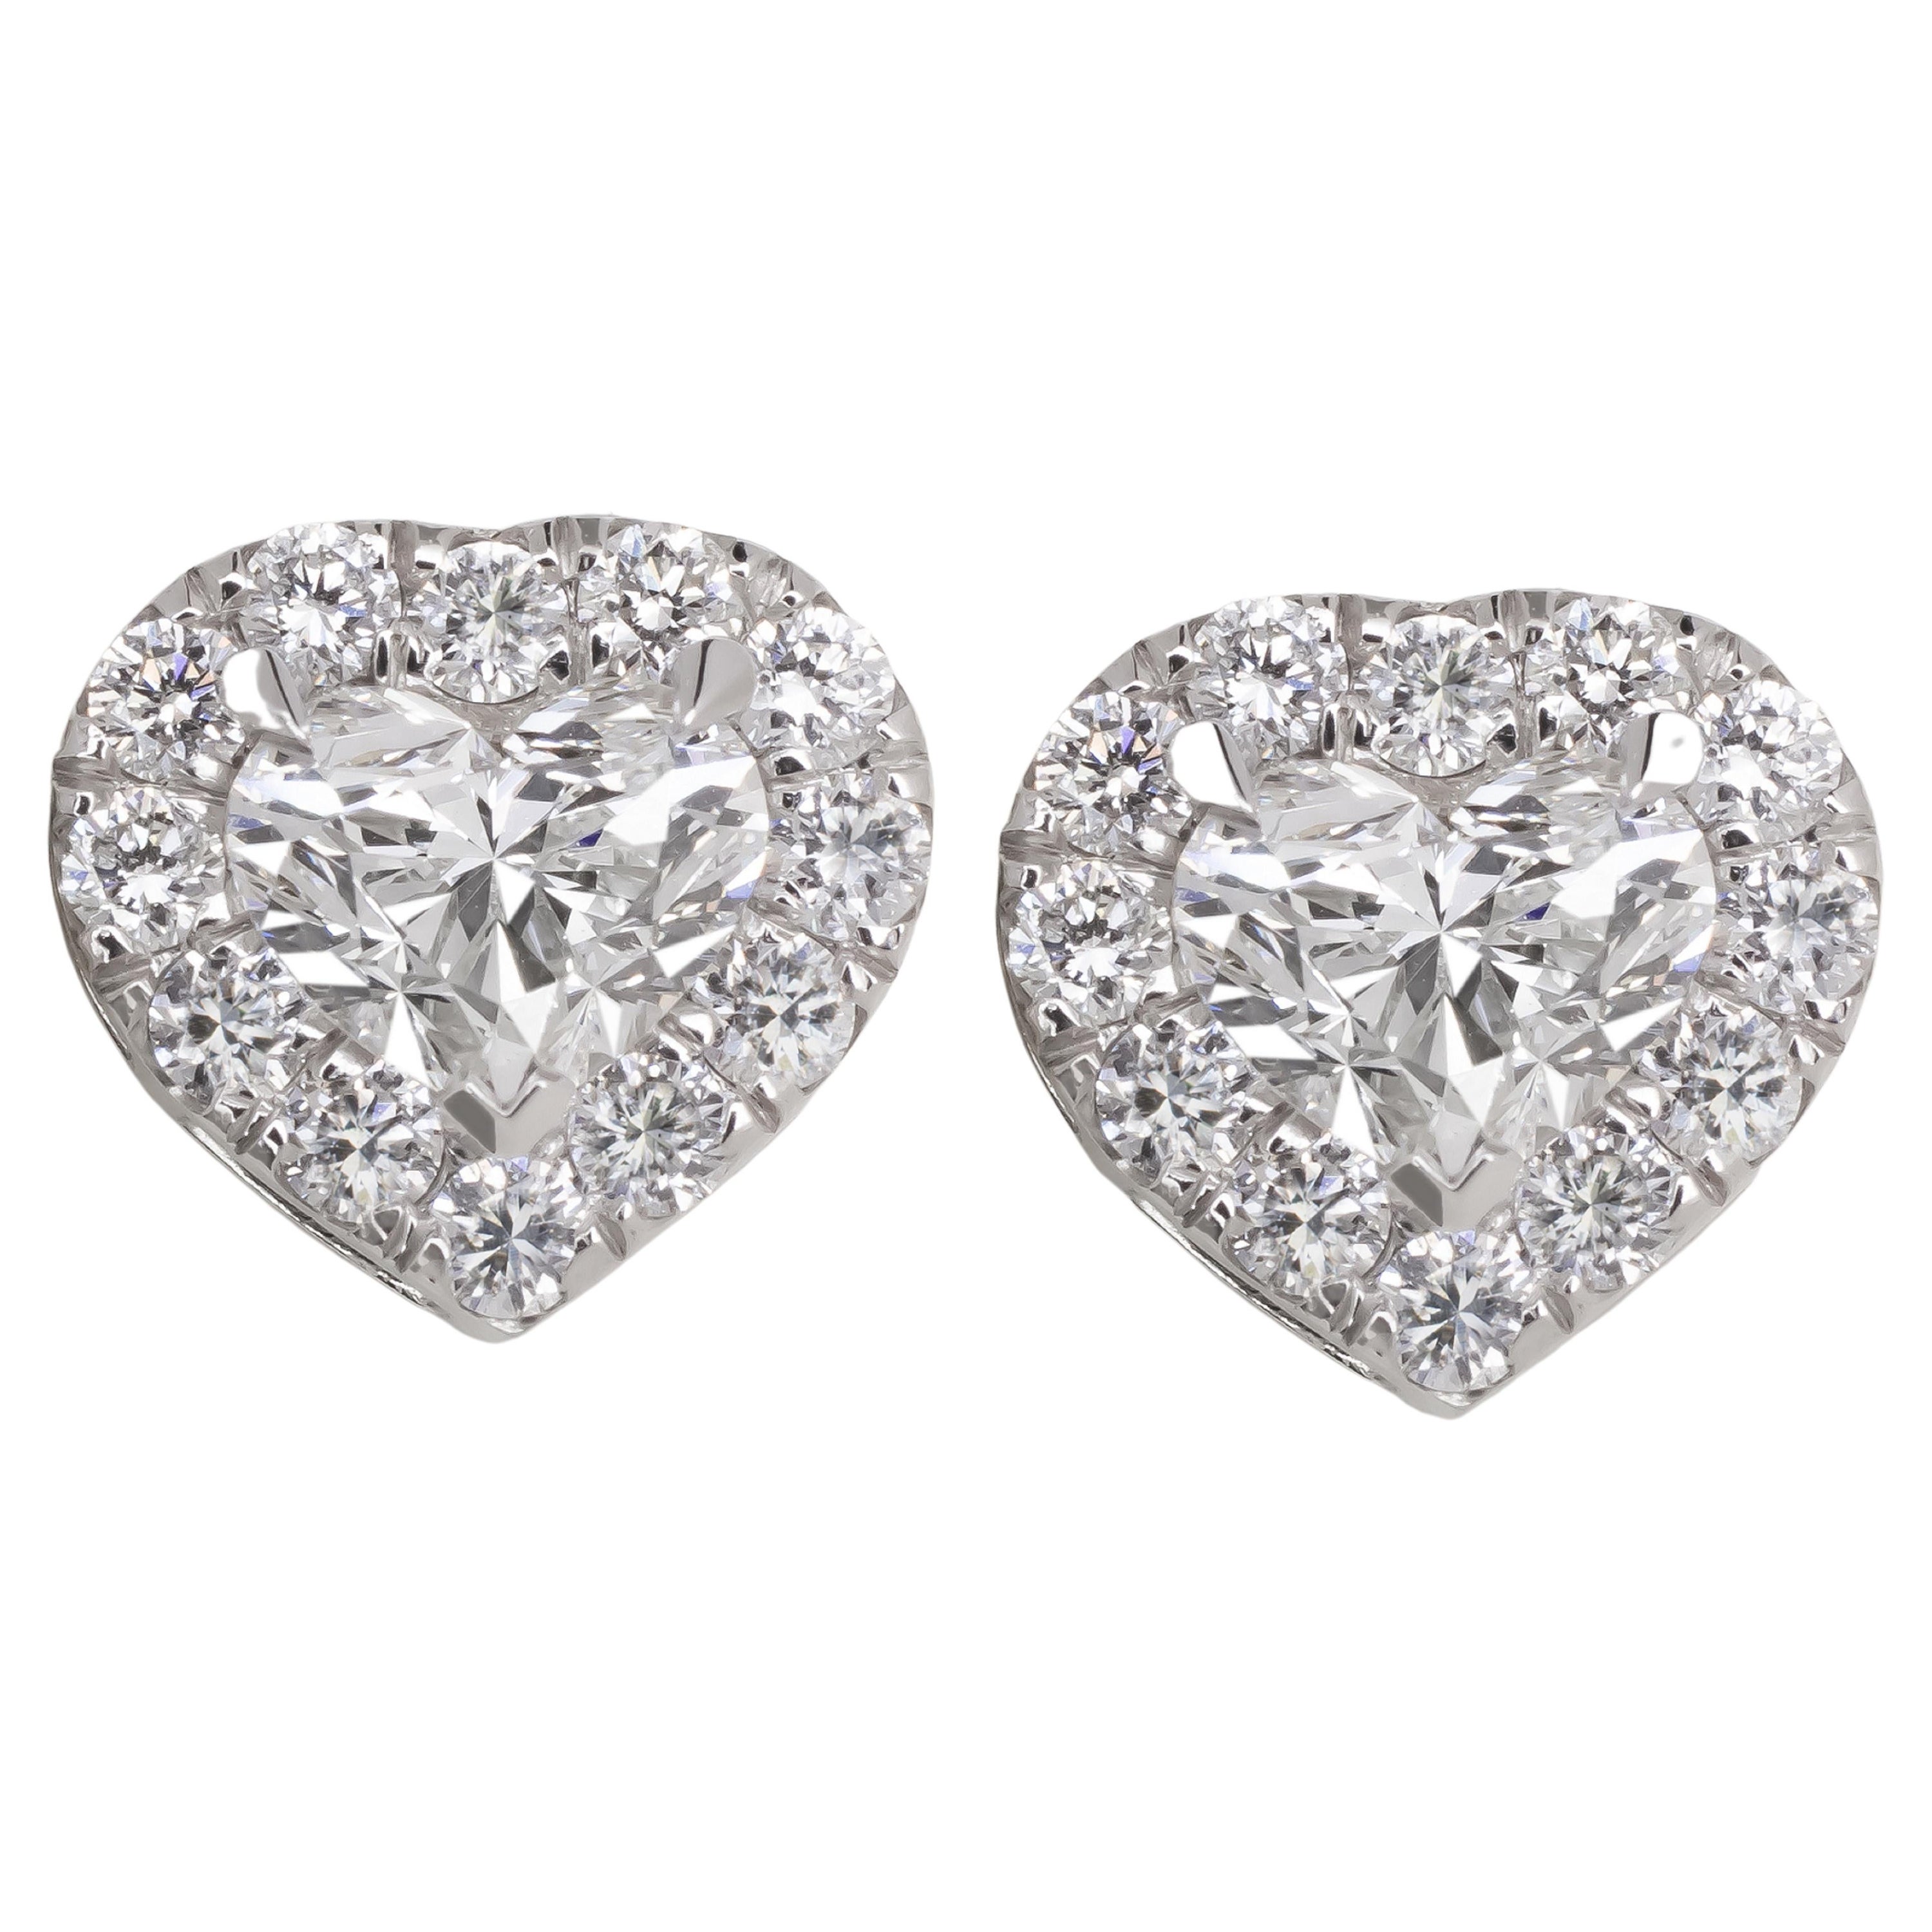 GIA Certified 2 Carat Heart Shape Diamond Stud D/E Color VVS1 Clarity For Sale